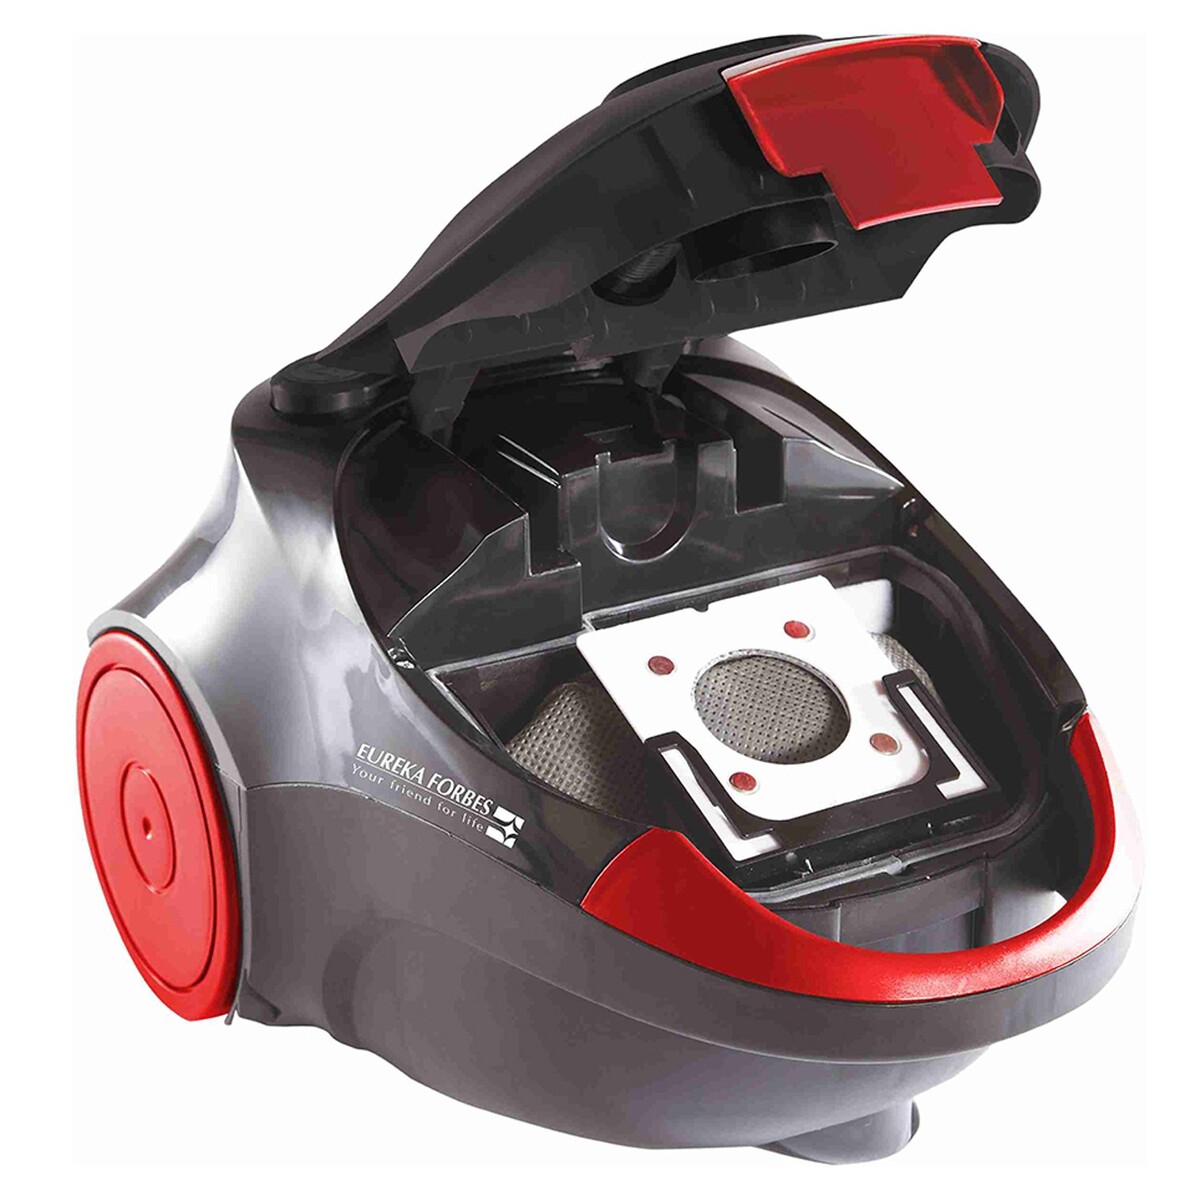 Eureka Forbes Swift Cleaner Multi-purpose Vacuum Cleaner